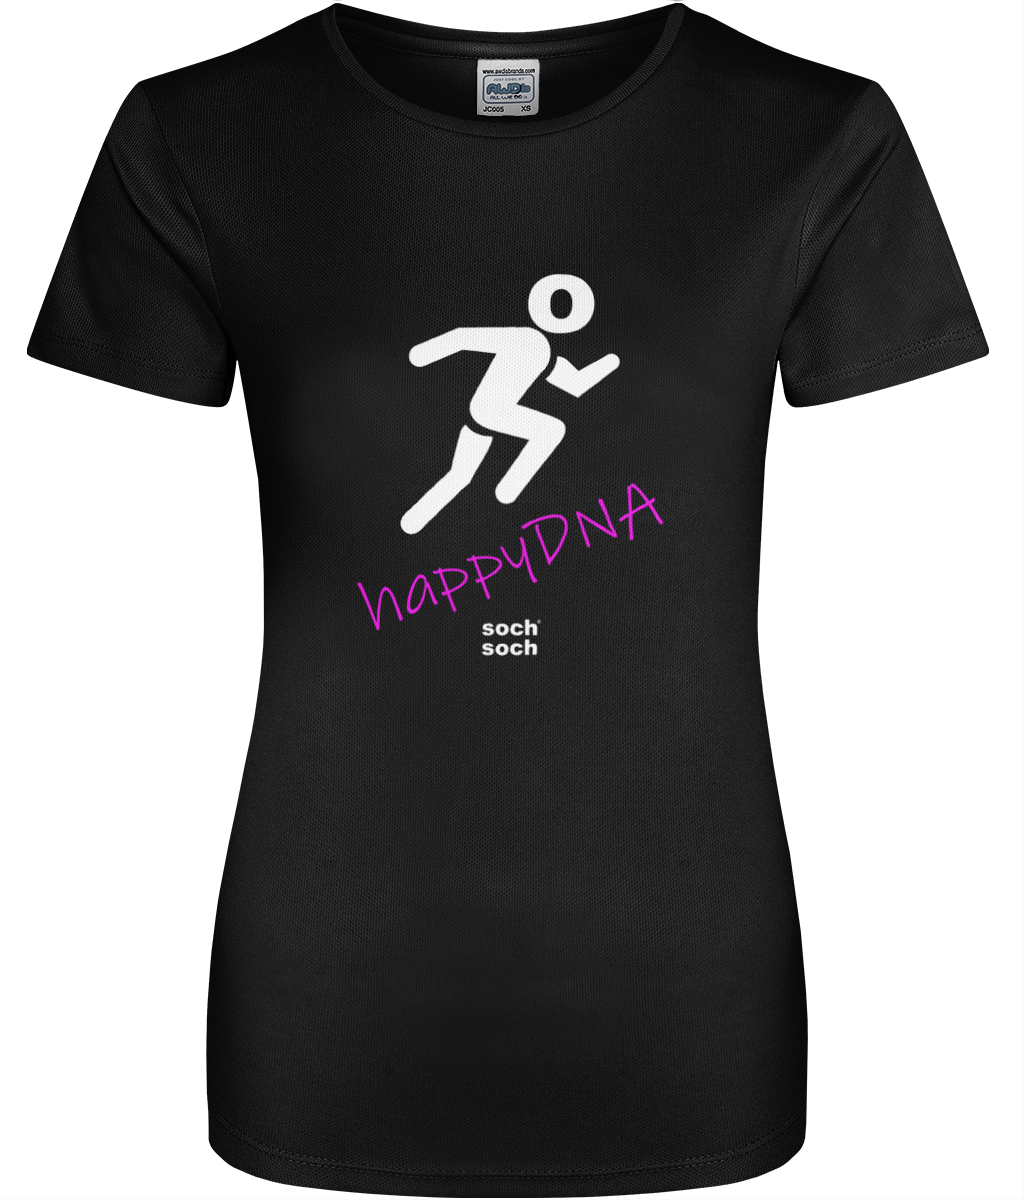 Women's Performance Running T-shirt - Pink happyDNA